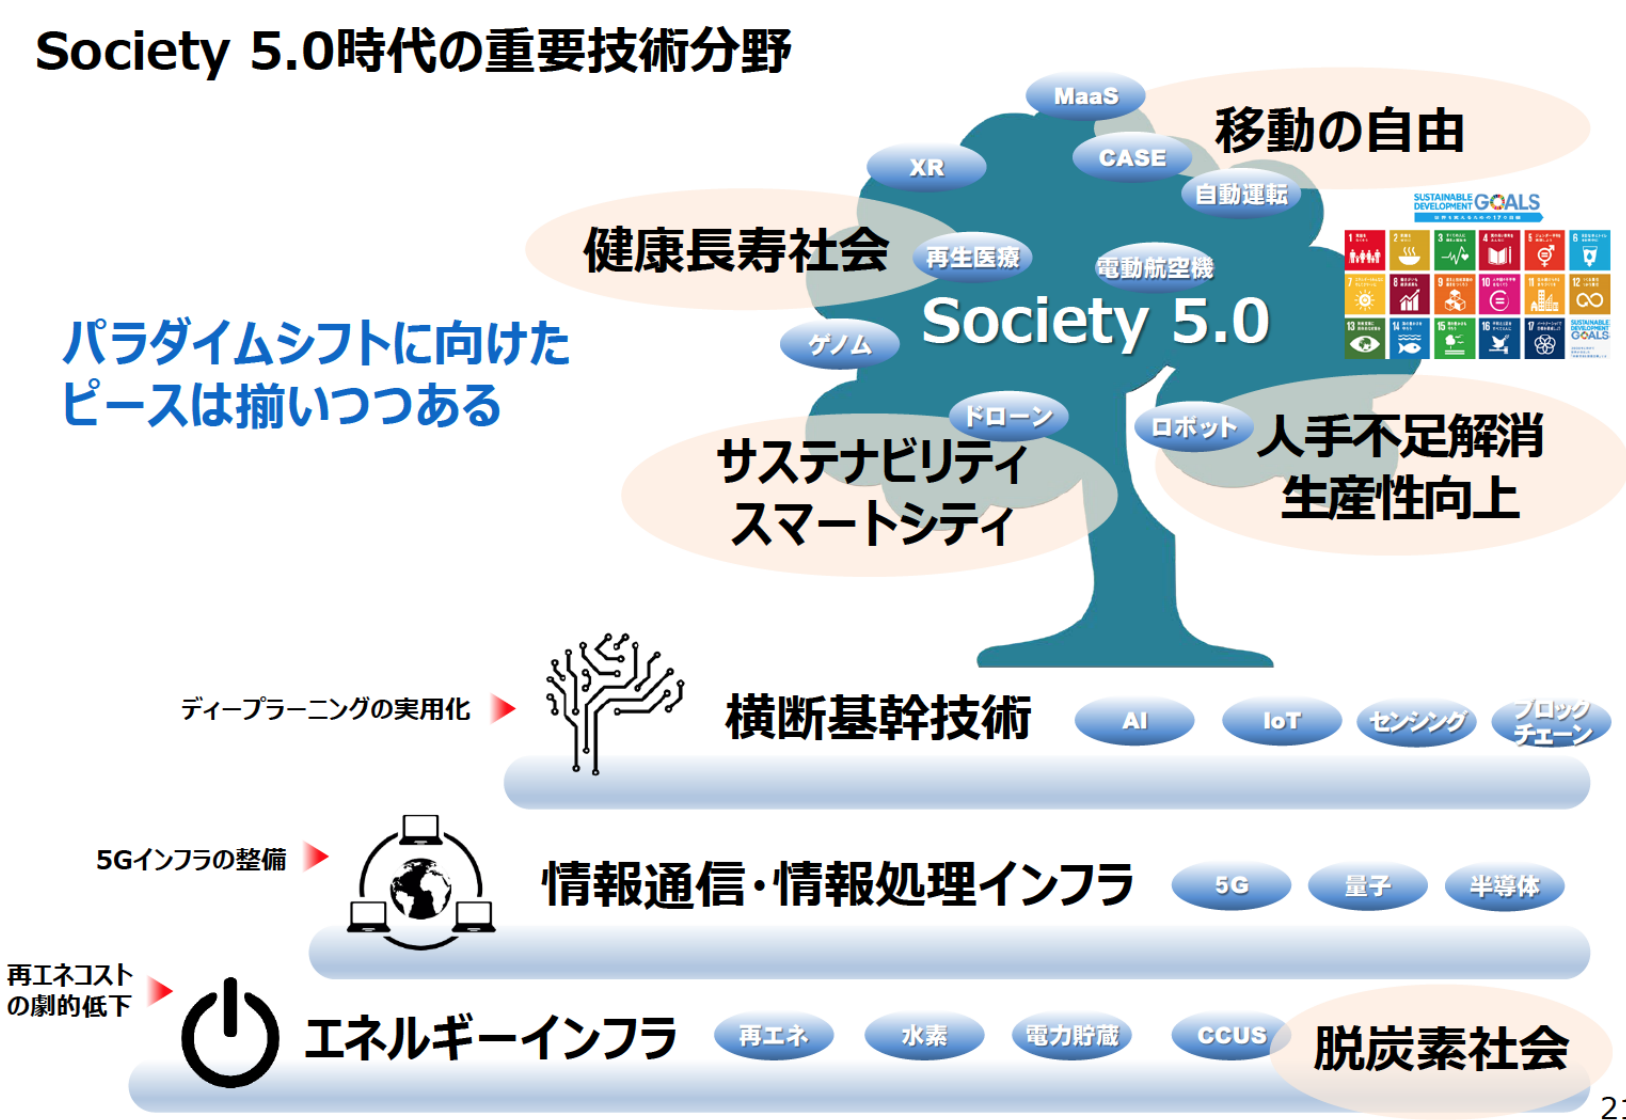 Society 5. Японское общество 5.0. Society 5.0 Japan. Общество 5.0. Цифровизация в Японии график Society 5.0.